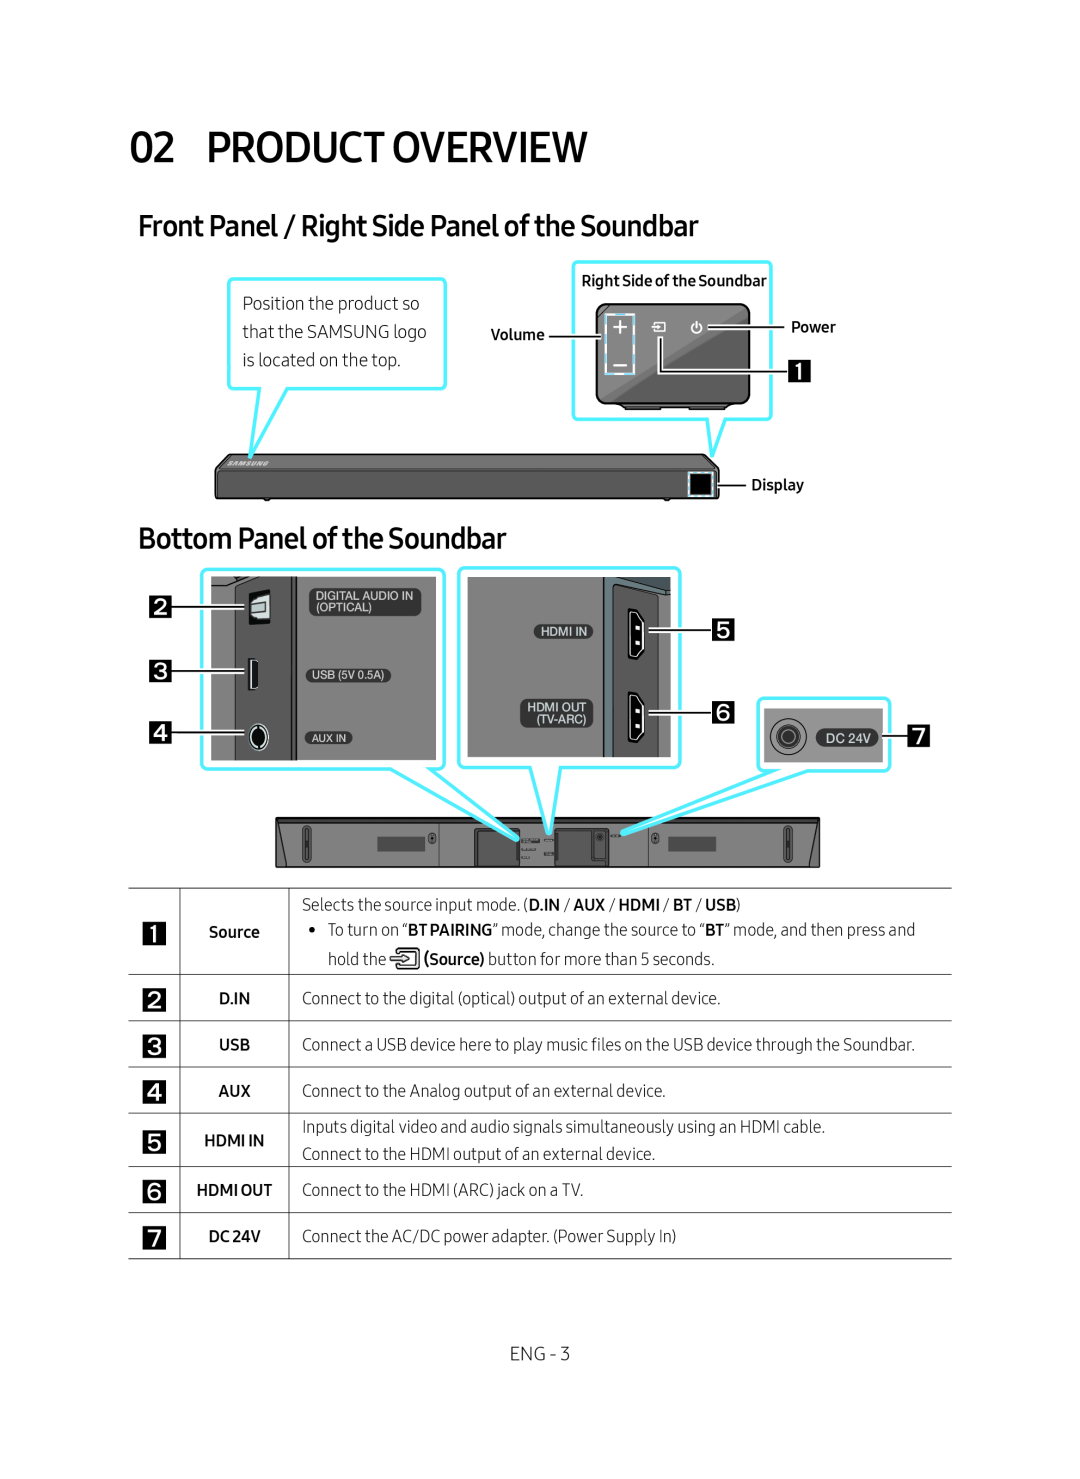 Front Panel / Right Side Panel of the Soundbar Standard HW-R50M